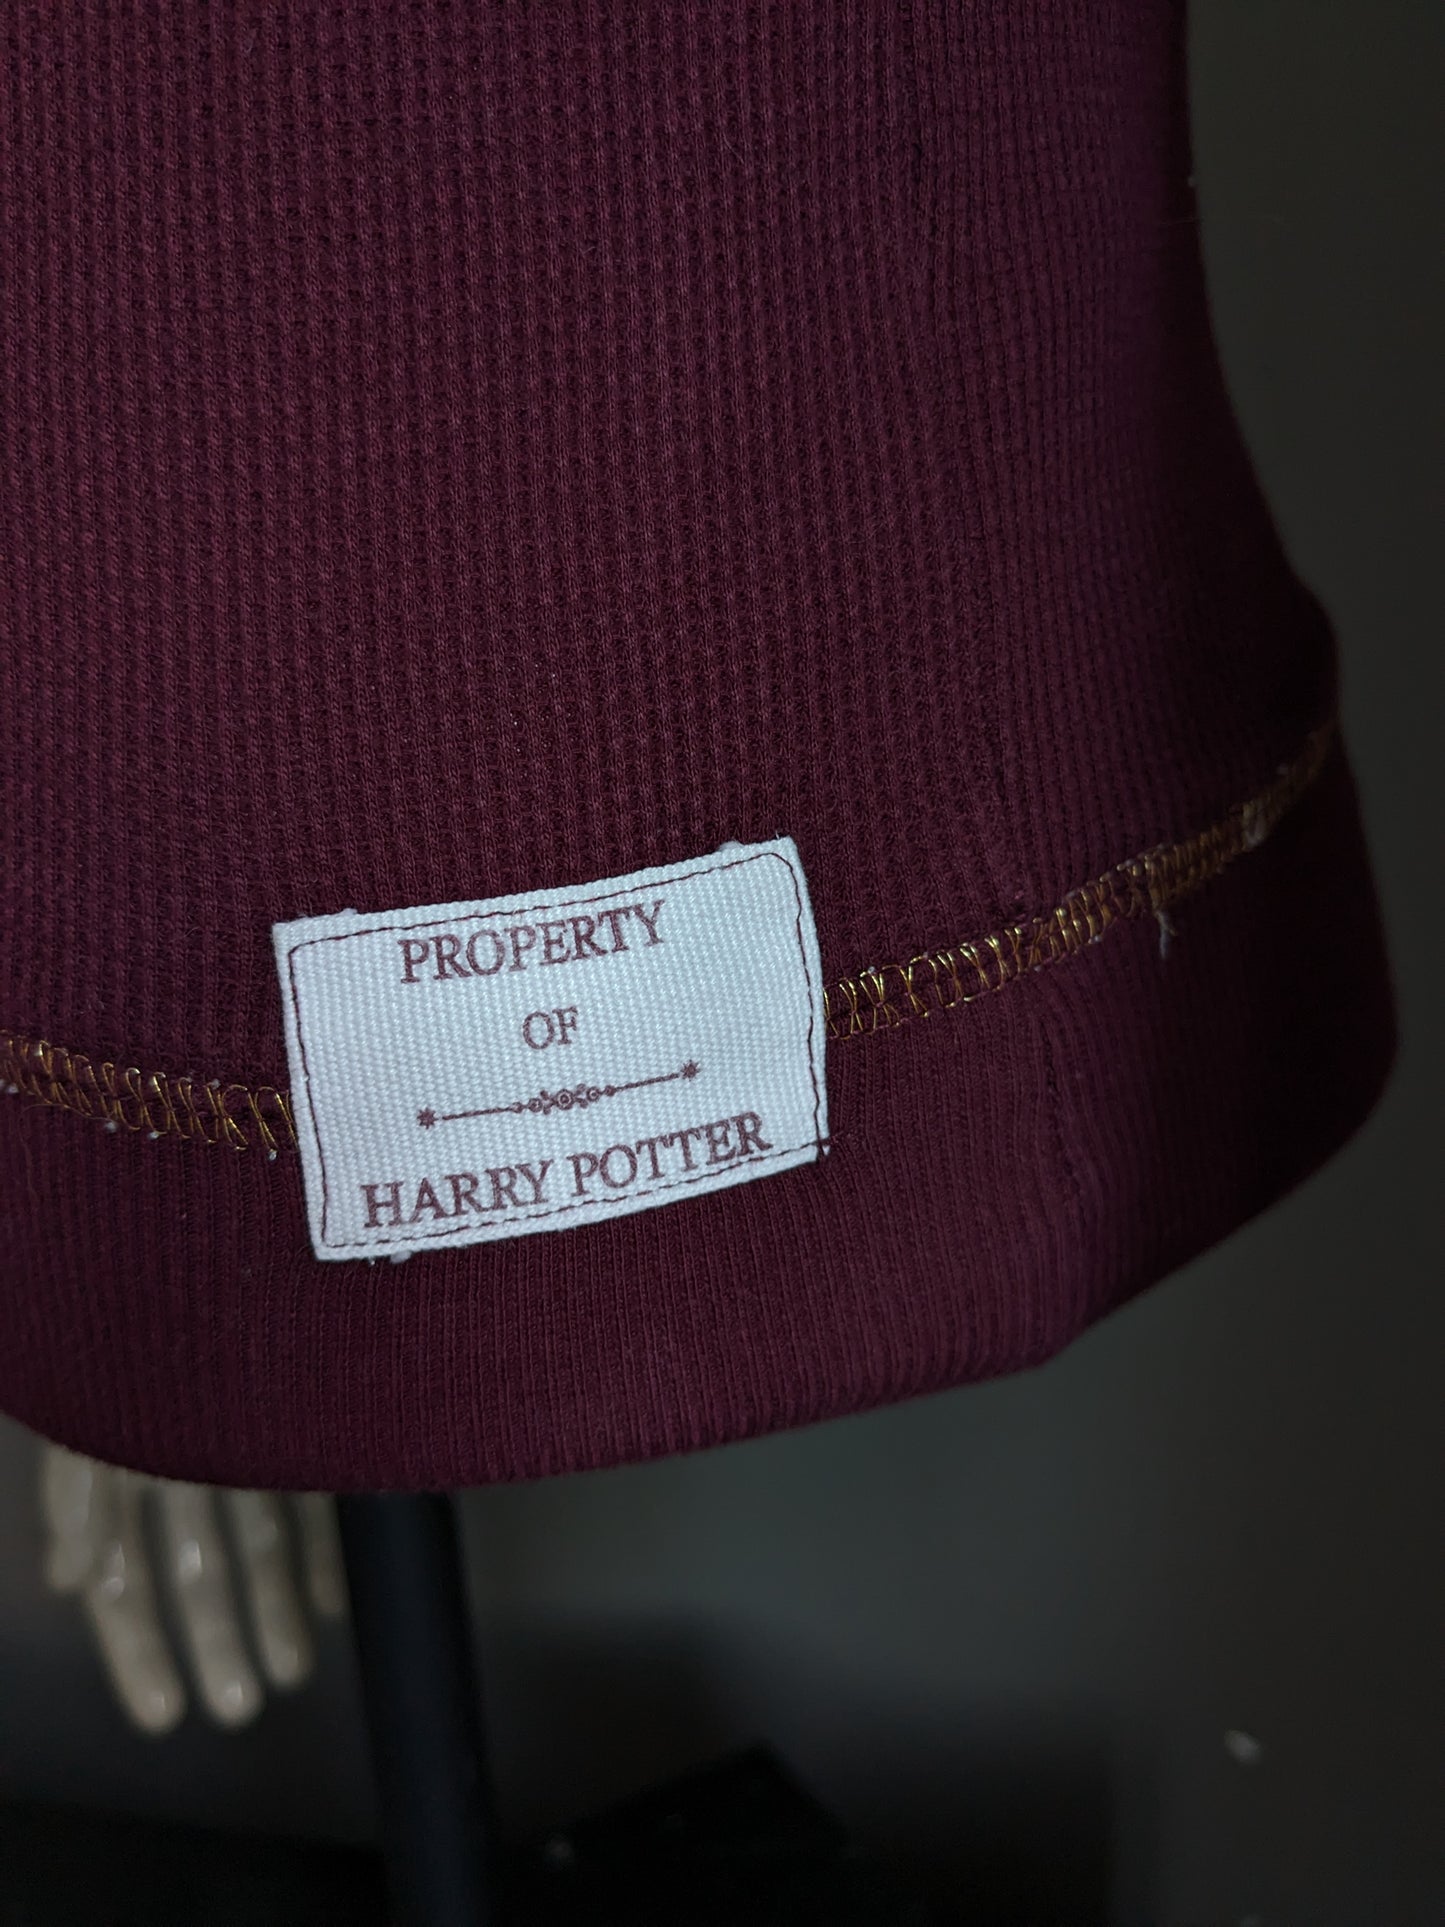 Harry Potter longsleeve. Bordeaux goudkleurig. Hogwarts school. Maat S.